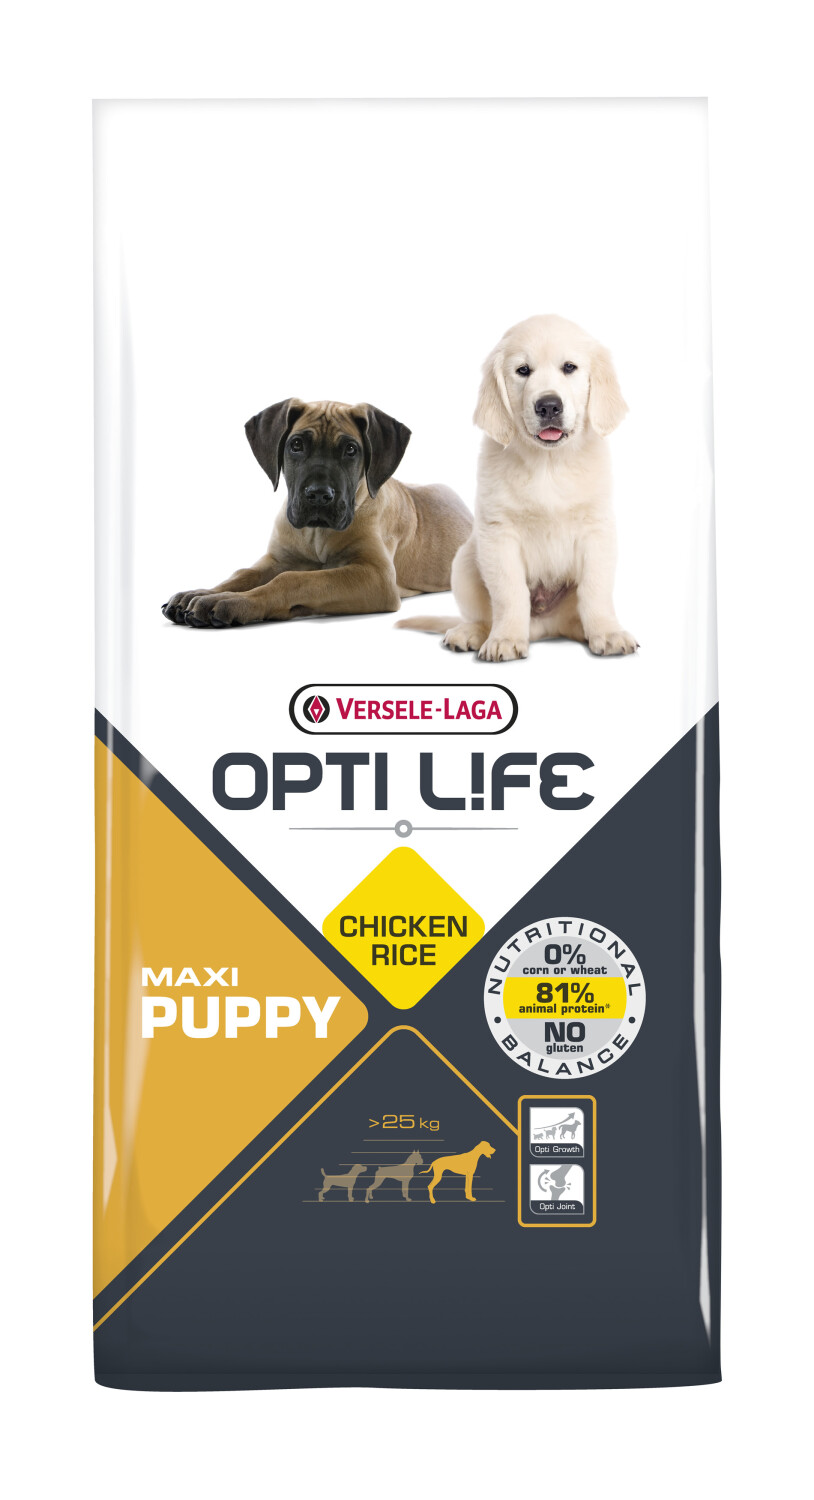 Afbeelding Opti Life Puppy Maxi hondenvoer 12.5 kg door Tuinadvies.be